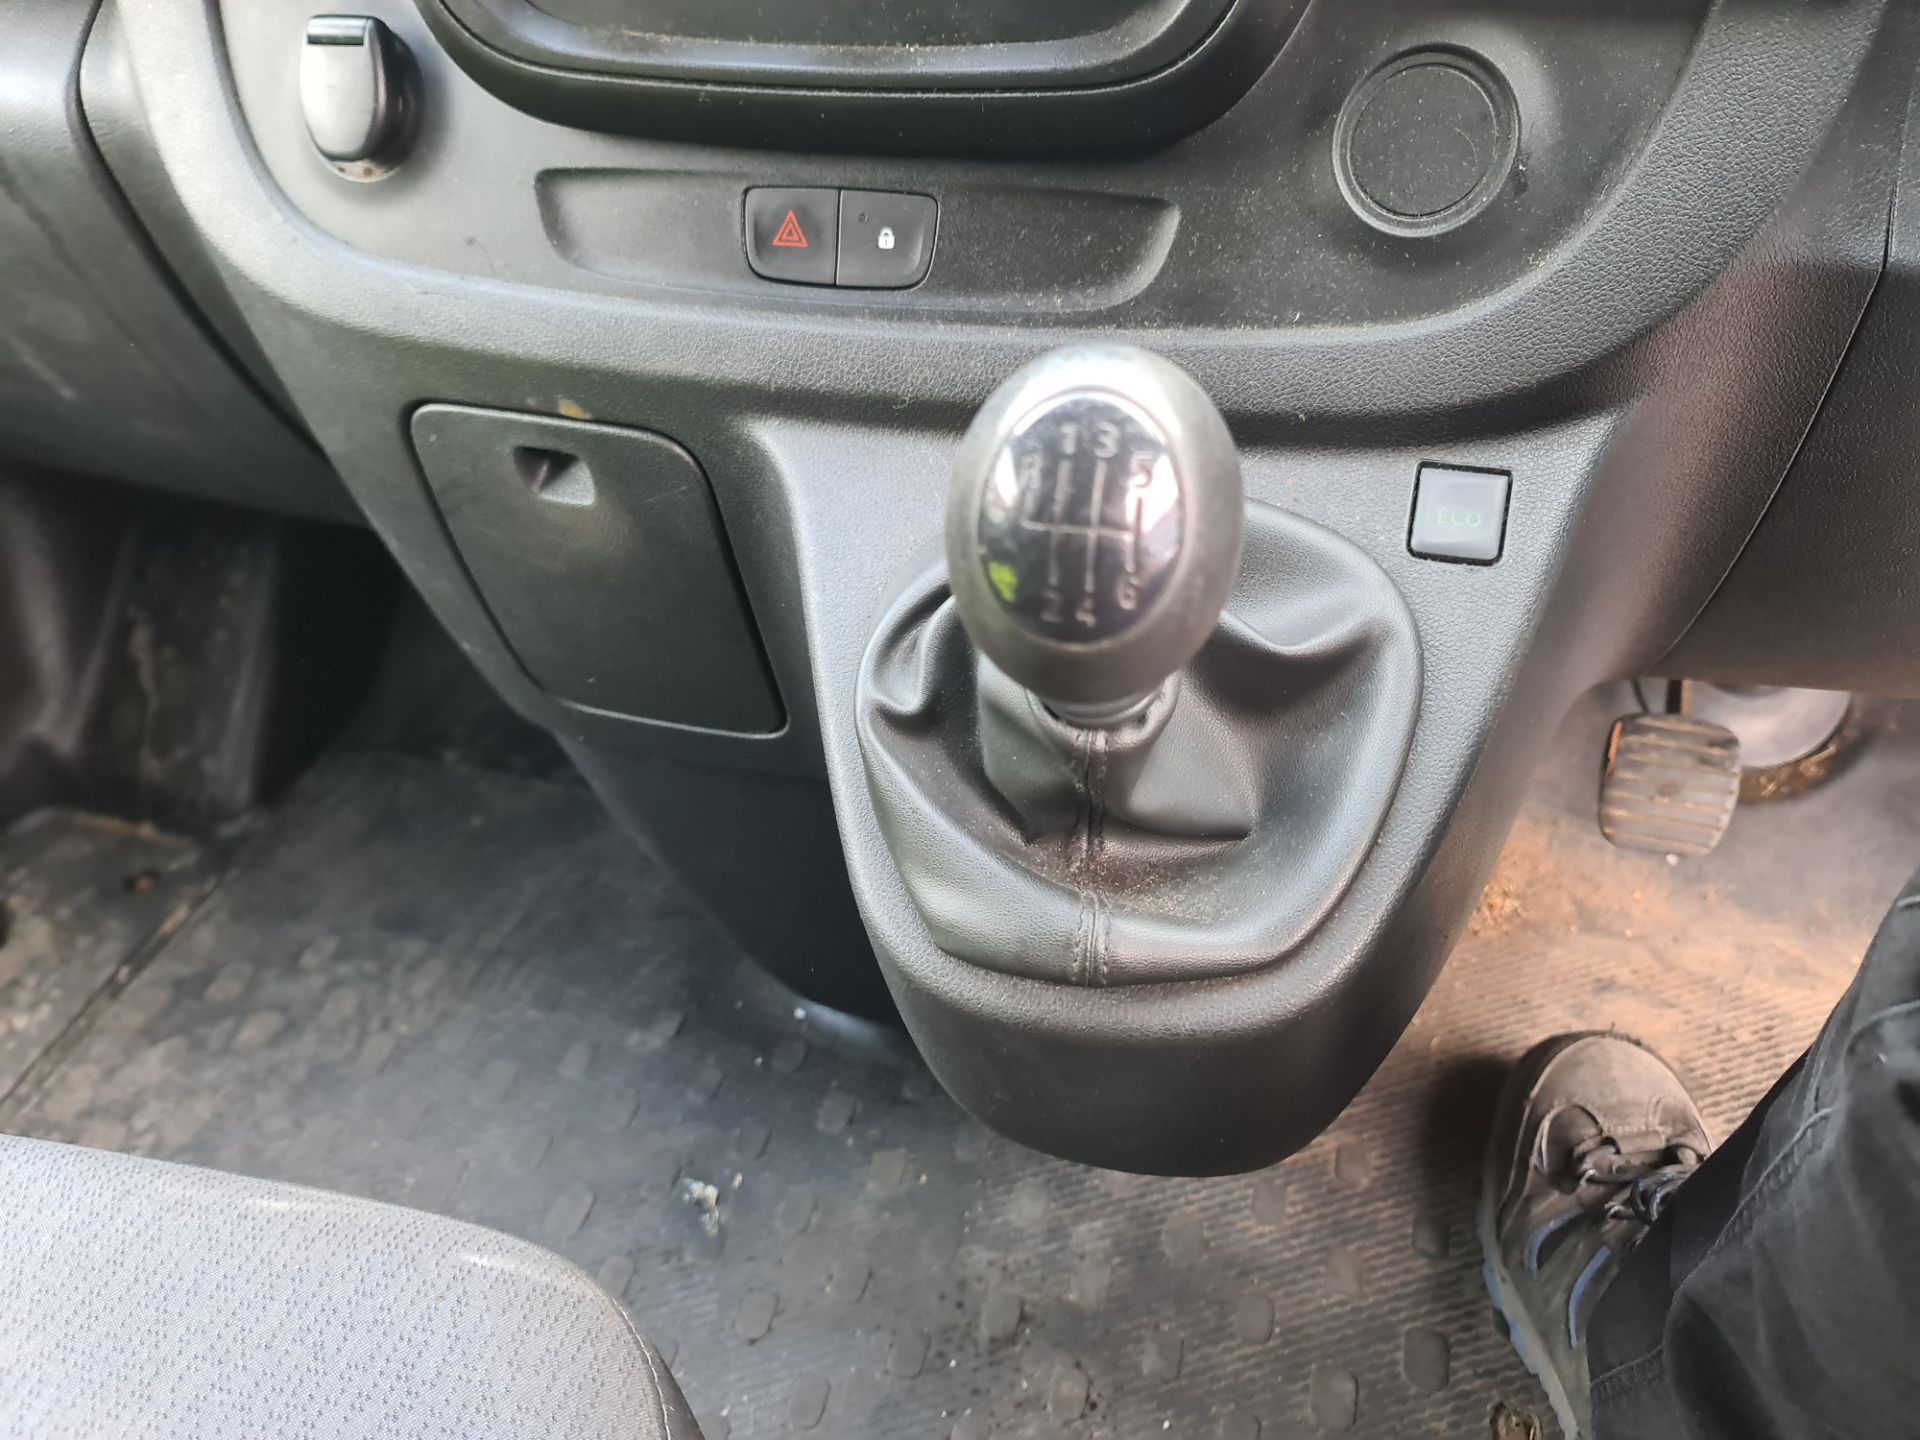 2015 Vauxhall Vivaro 2900 CDTi panel van - Image 75 of 81